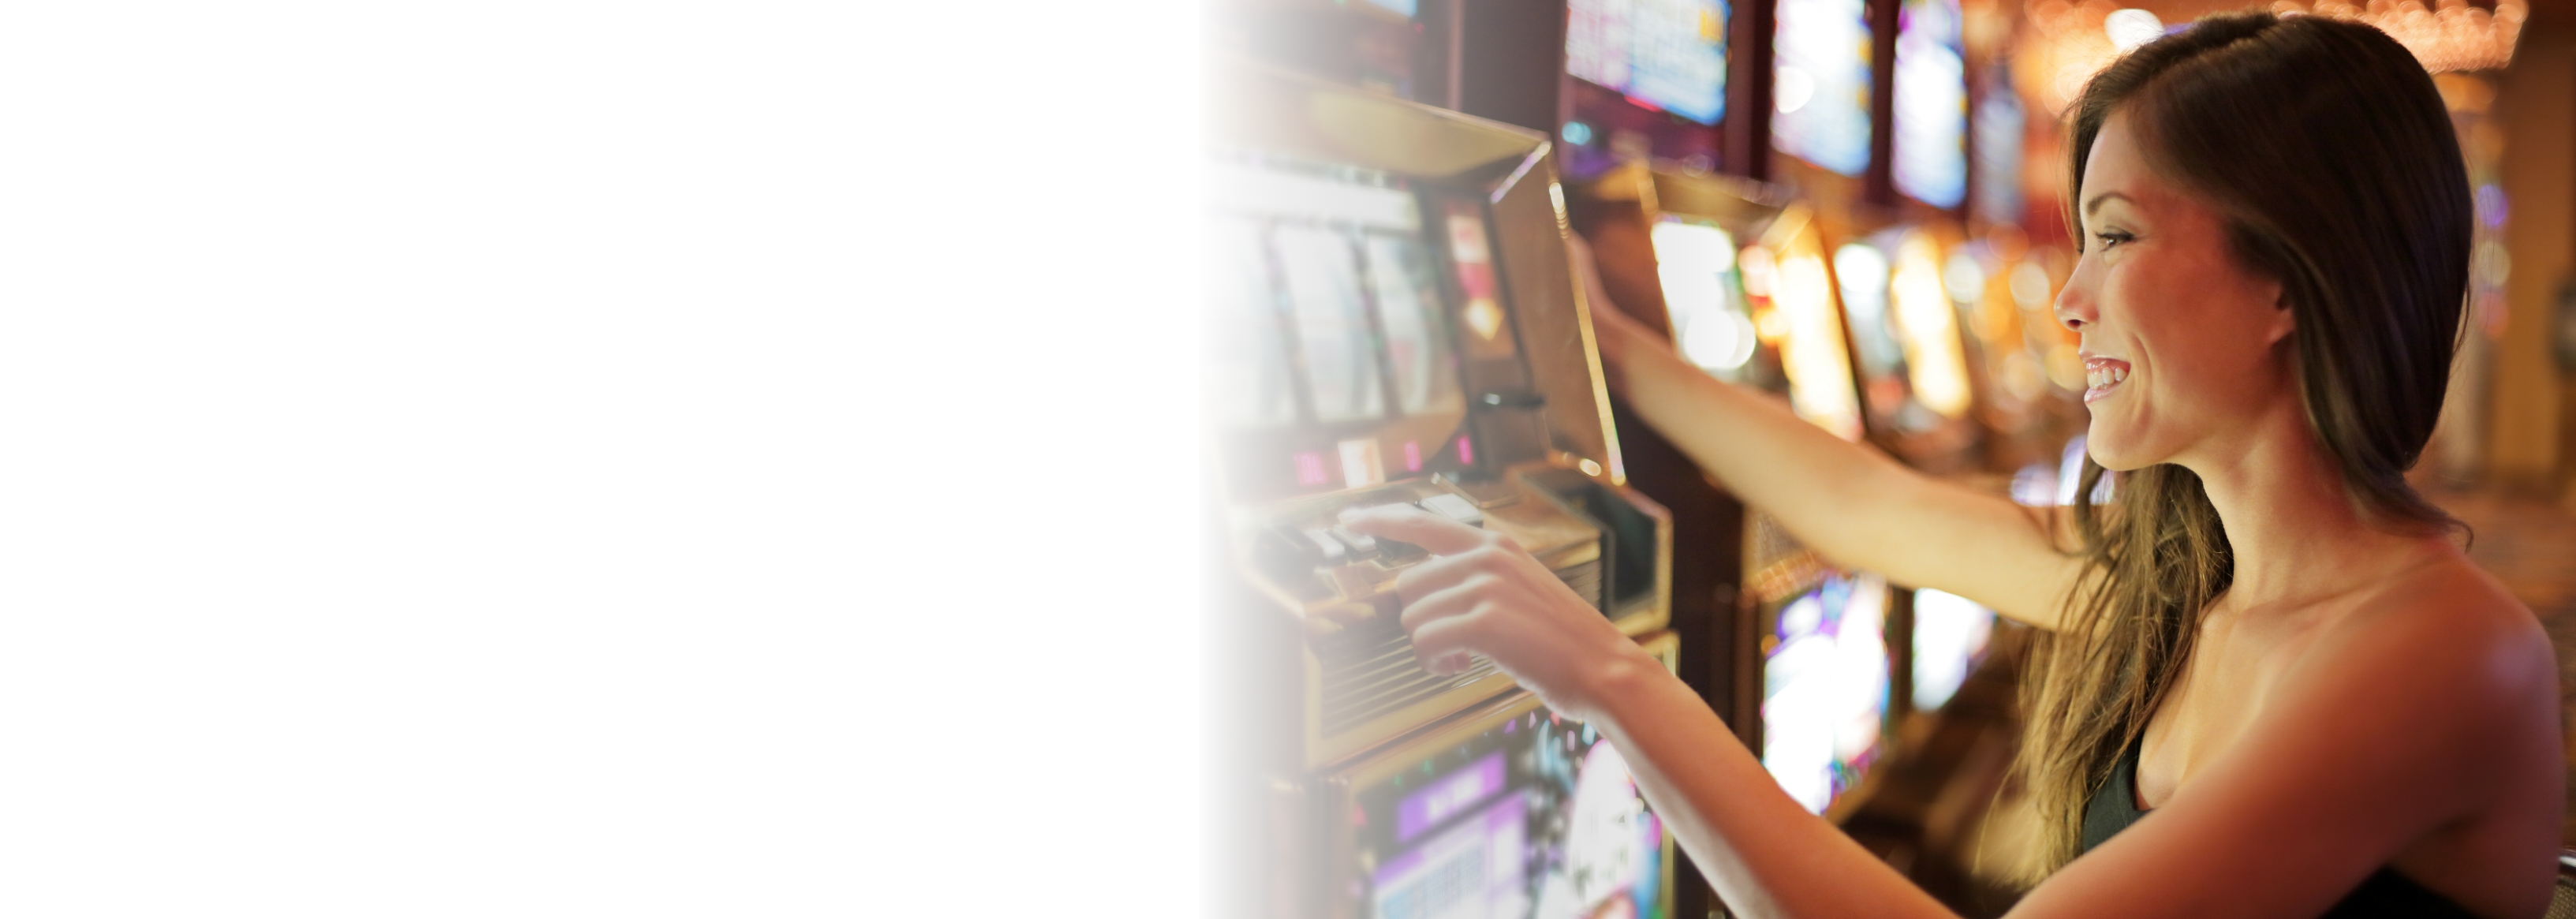 woman at casino using slot machine